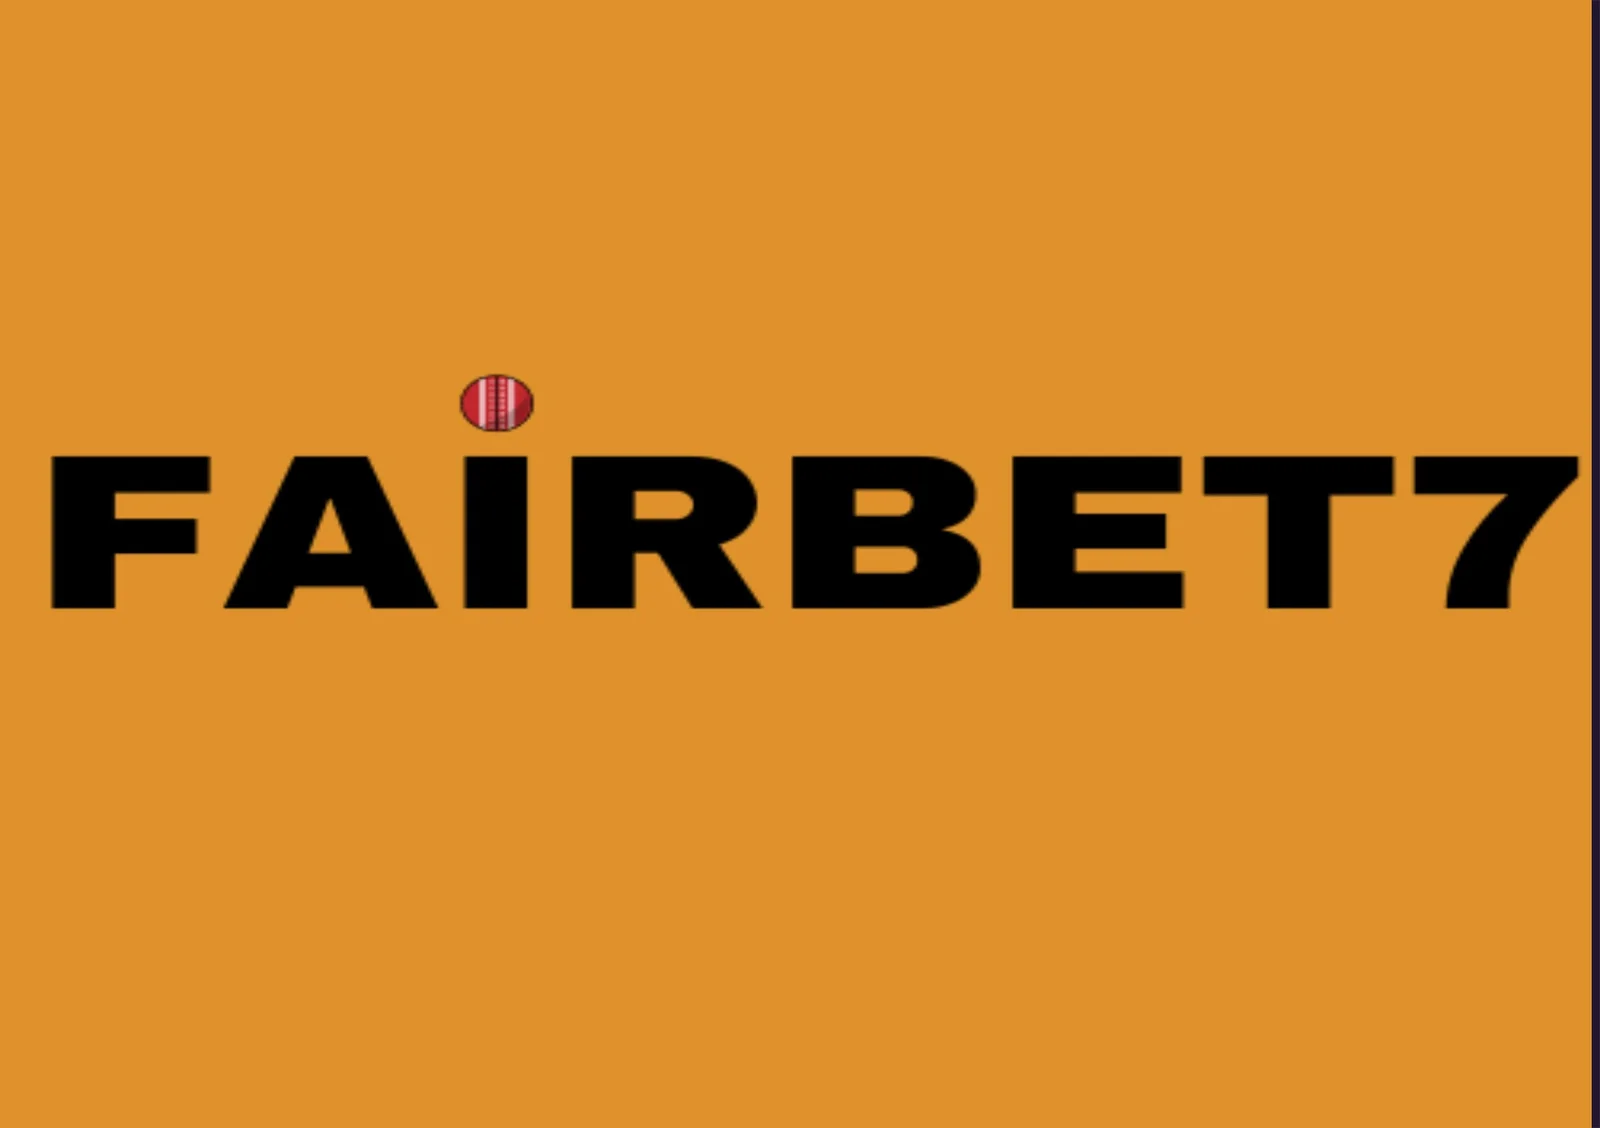 Fairbet7